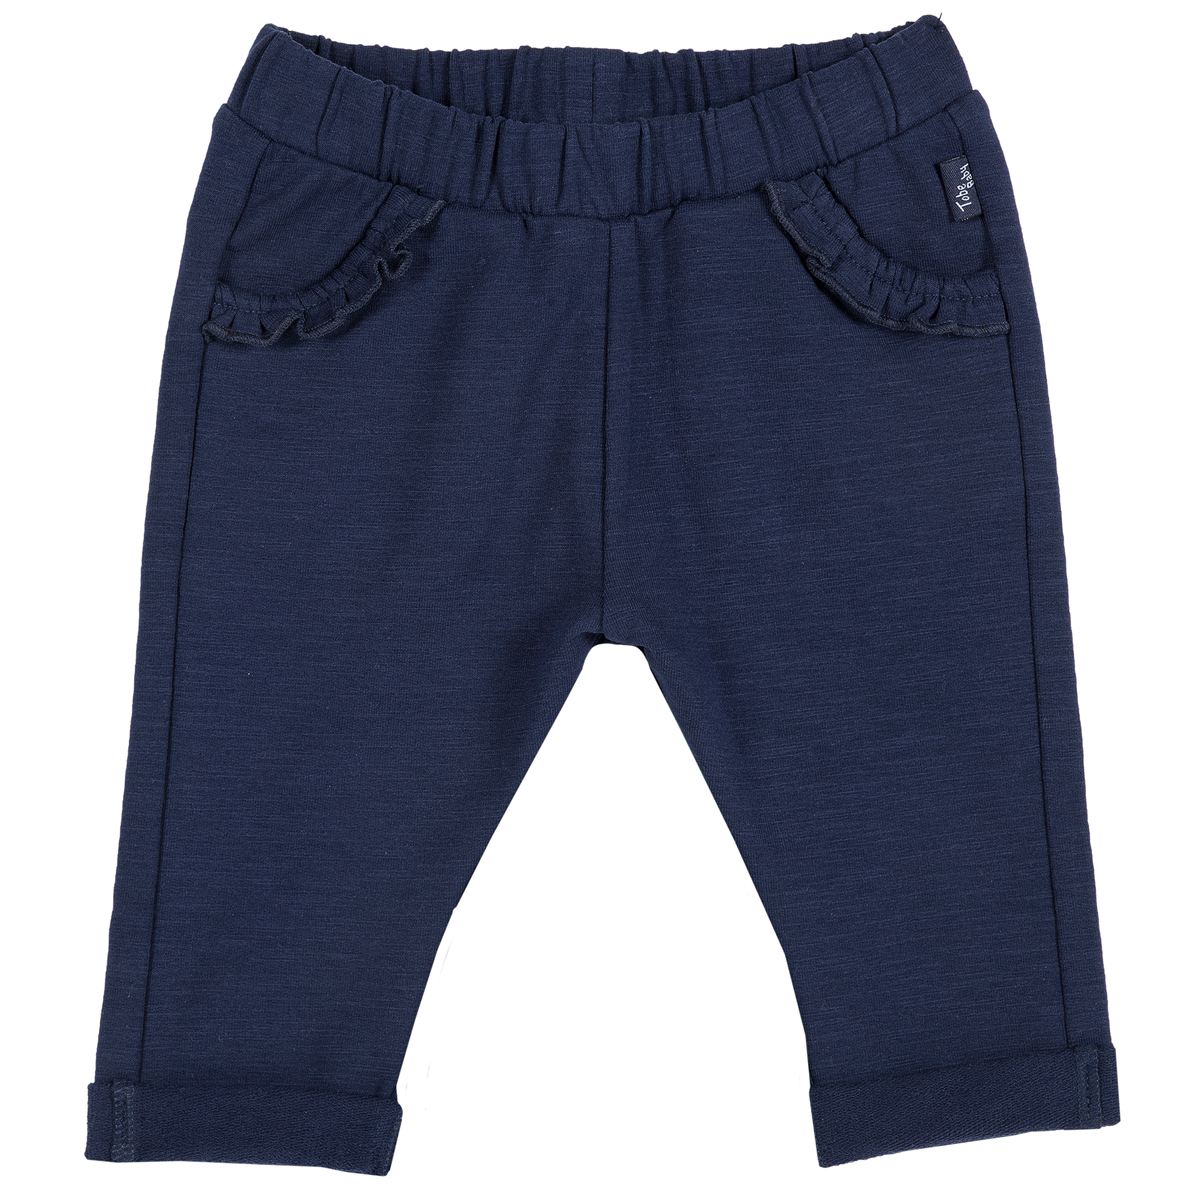 Pantalon lung copii Chicco, albastru inchis, 24938